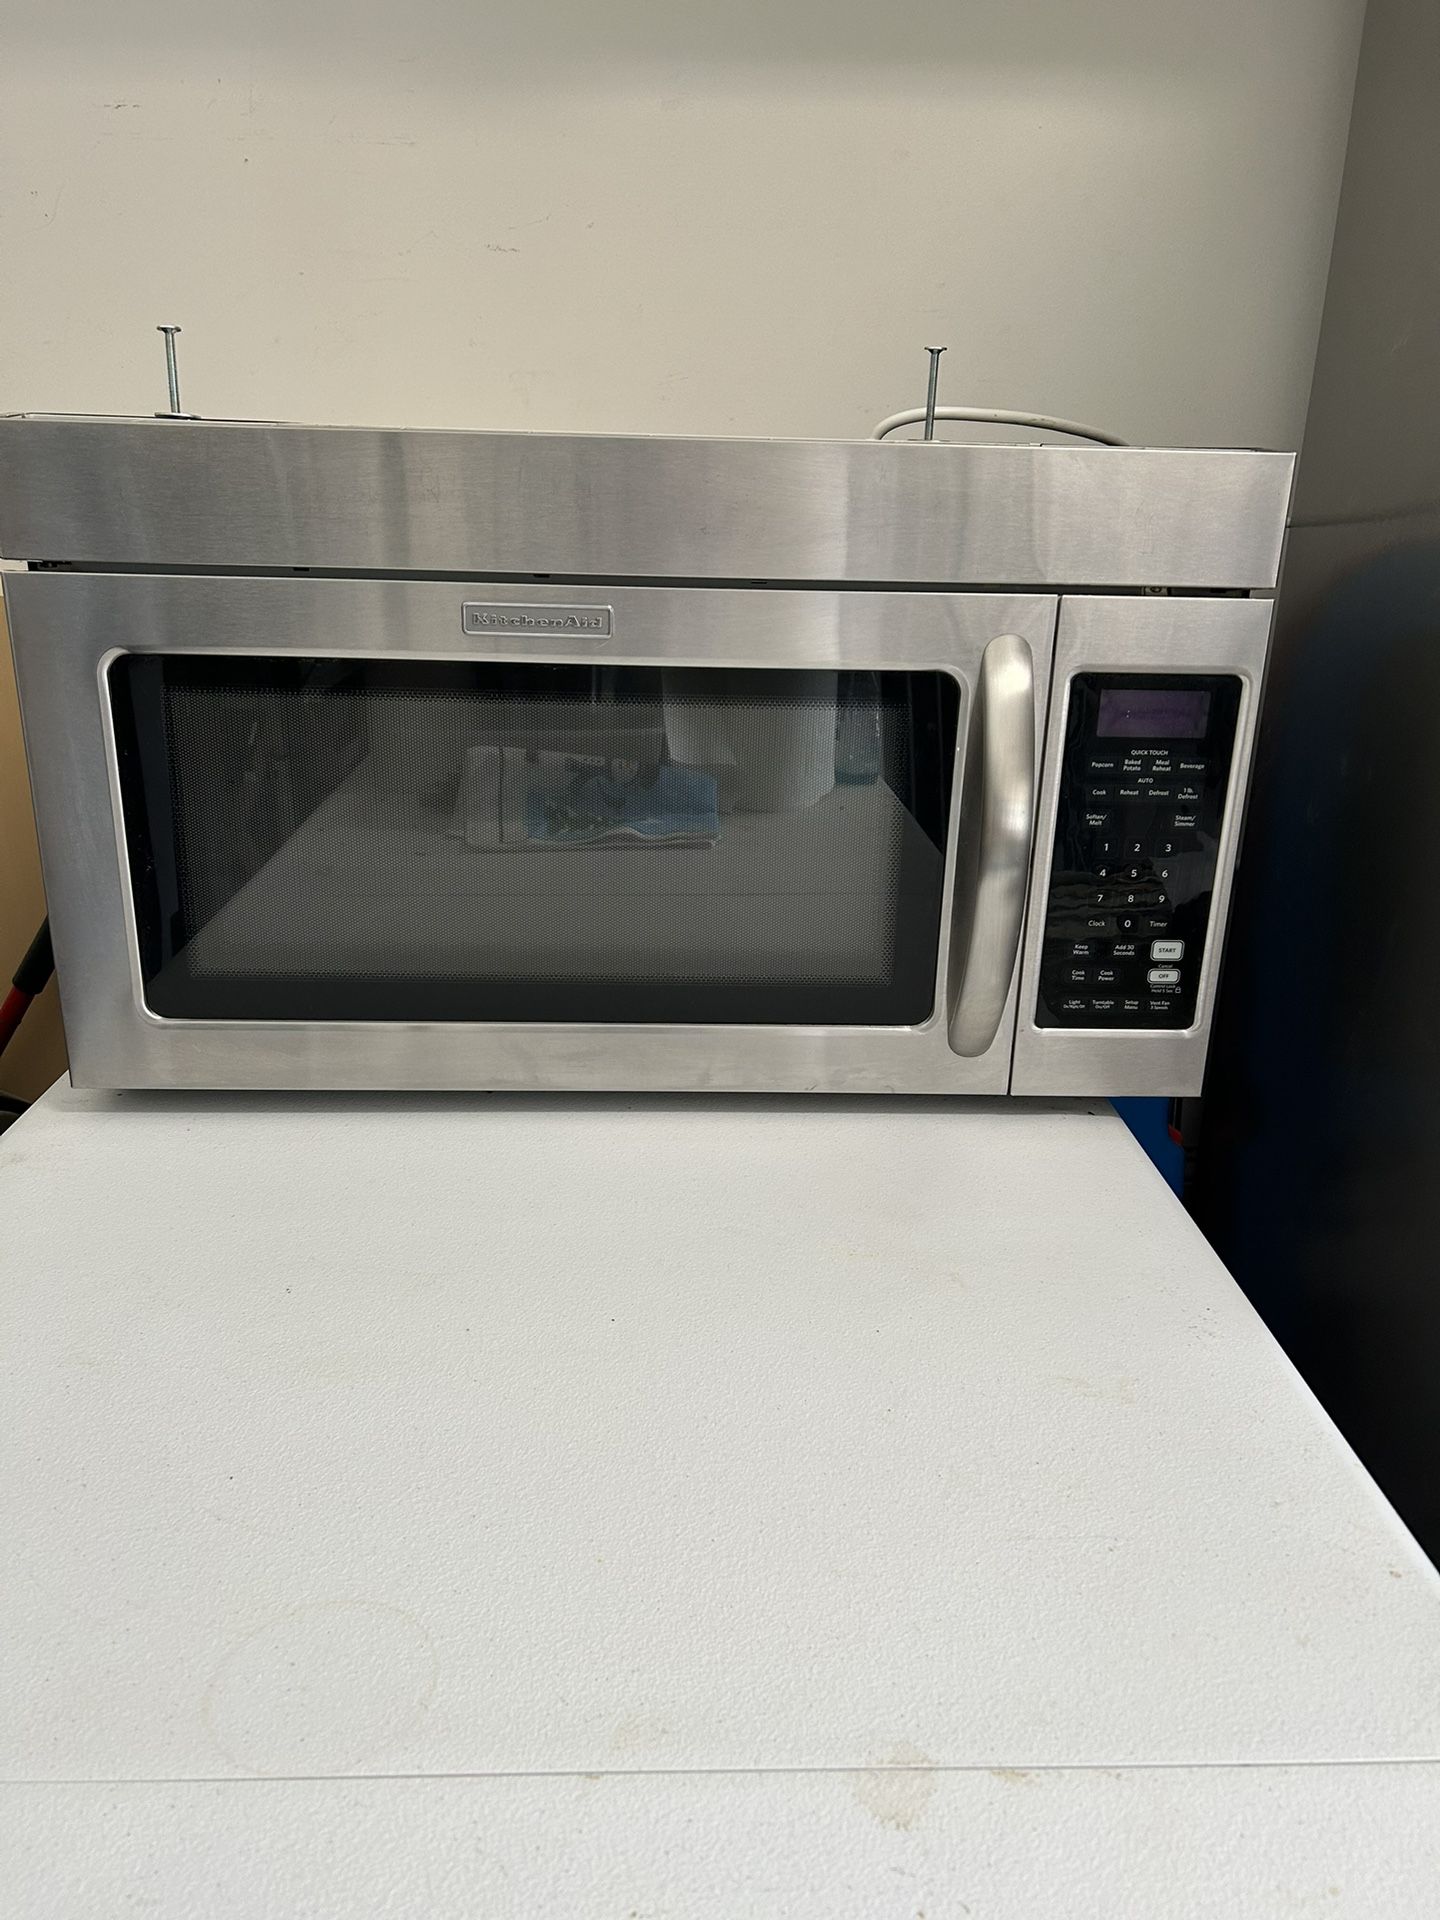 KitchenAid Microwave